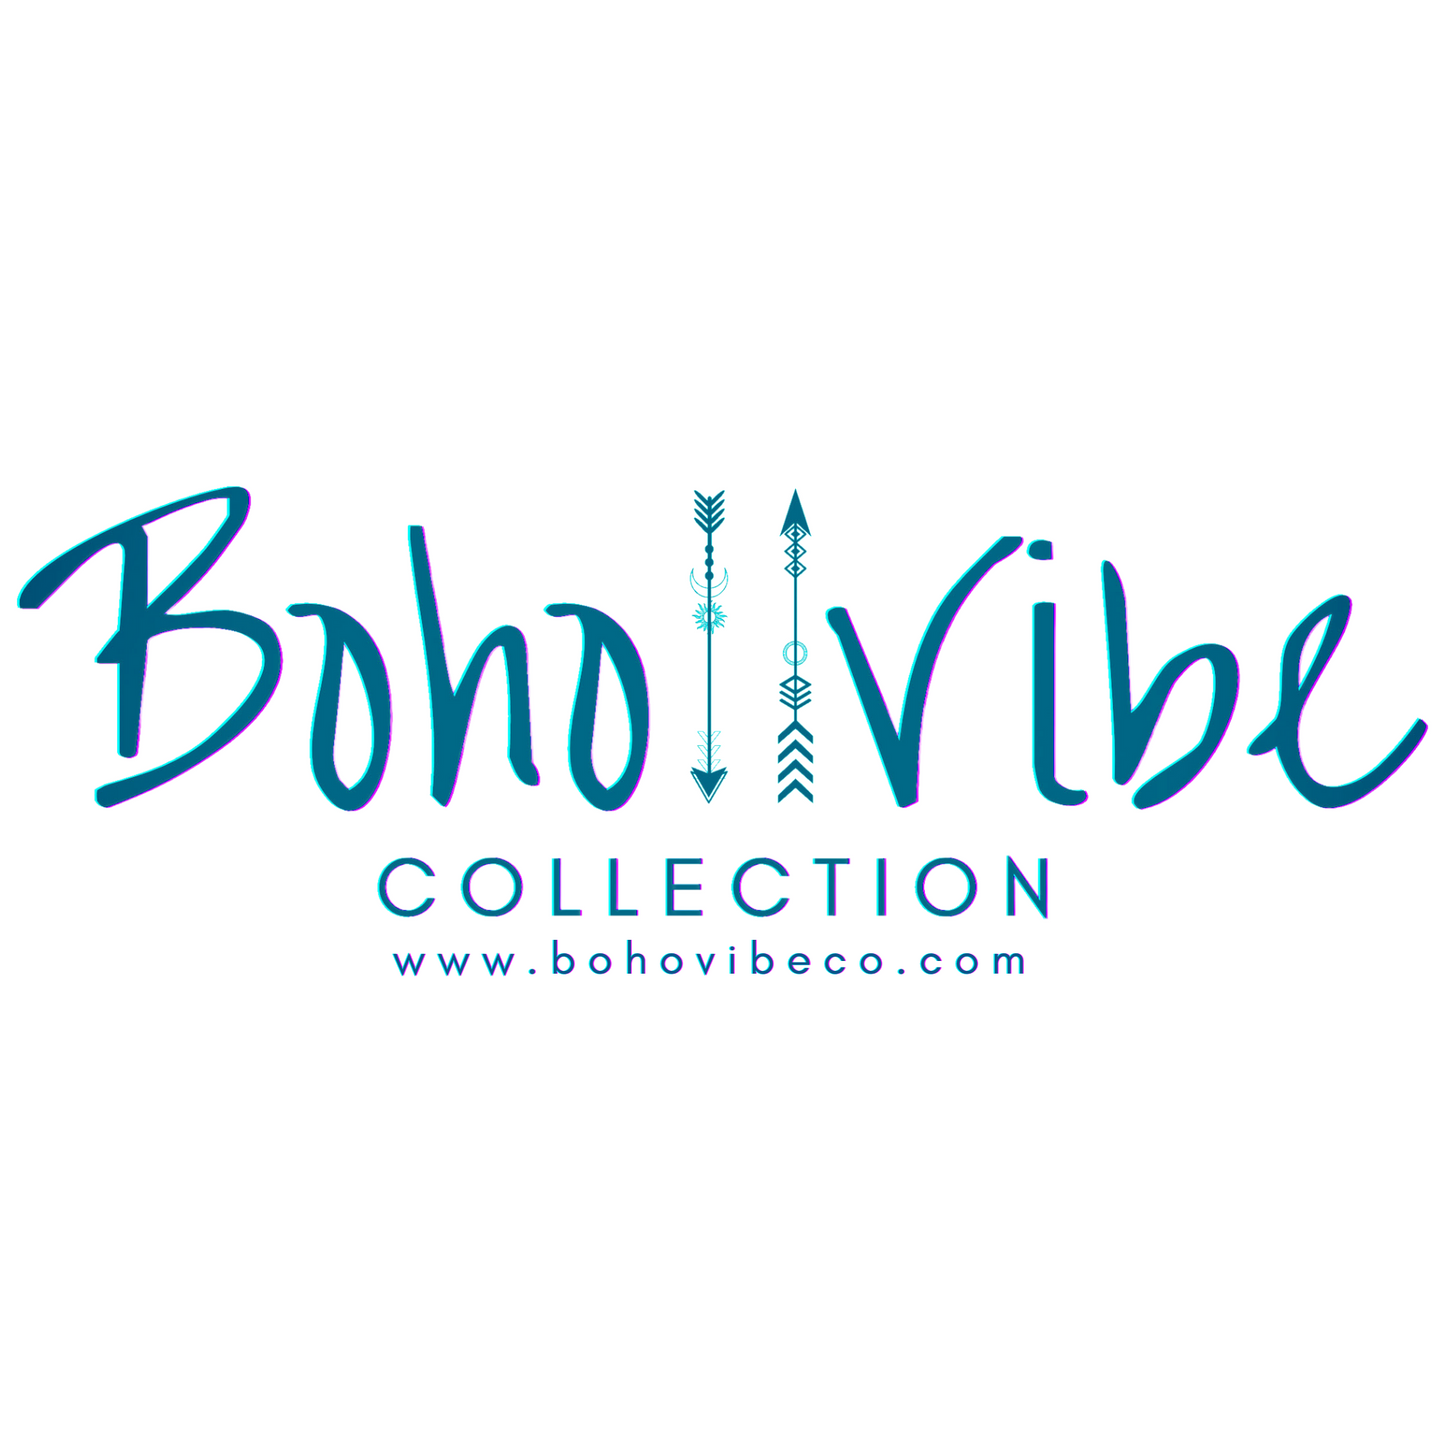 Boho ↡↟ Vibe Collection ↠ The Ike Charcoal Sunglasses 